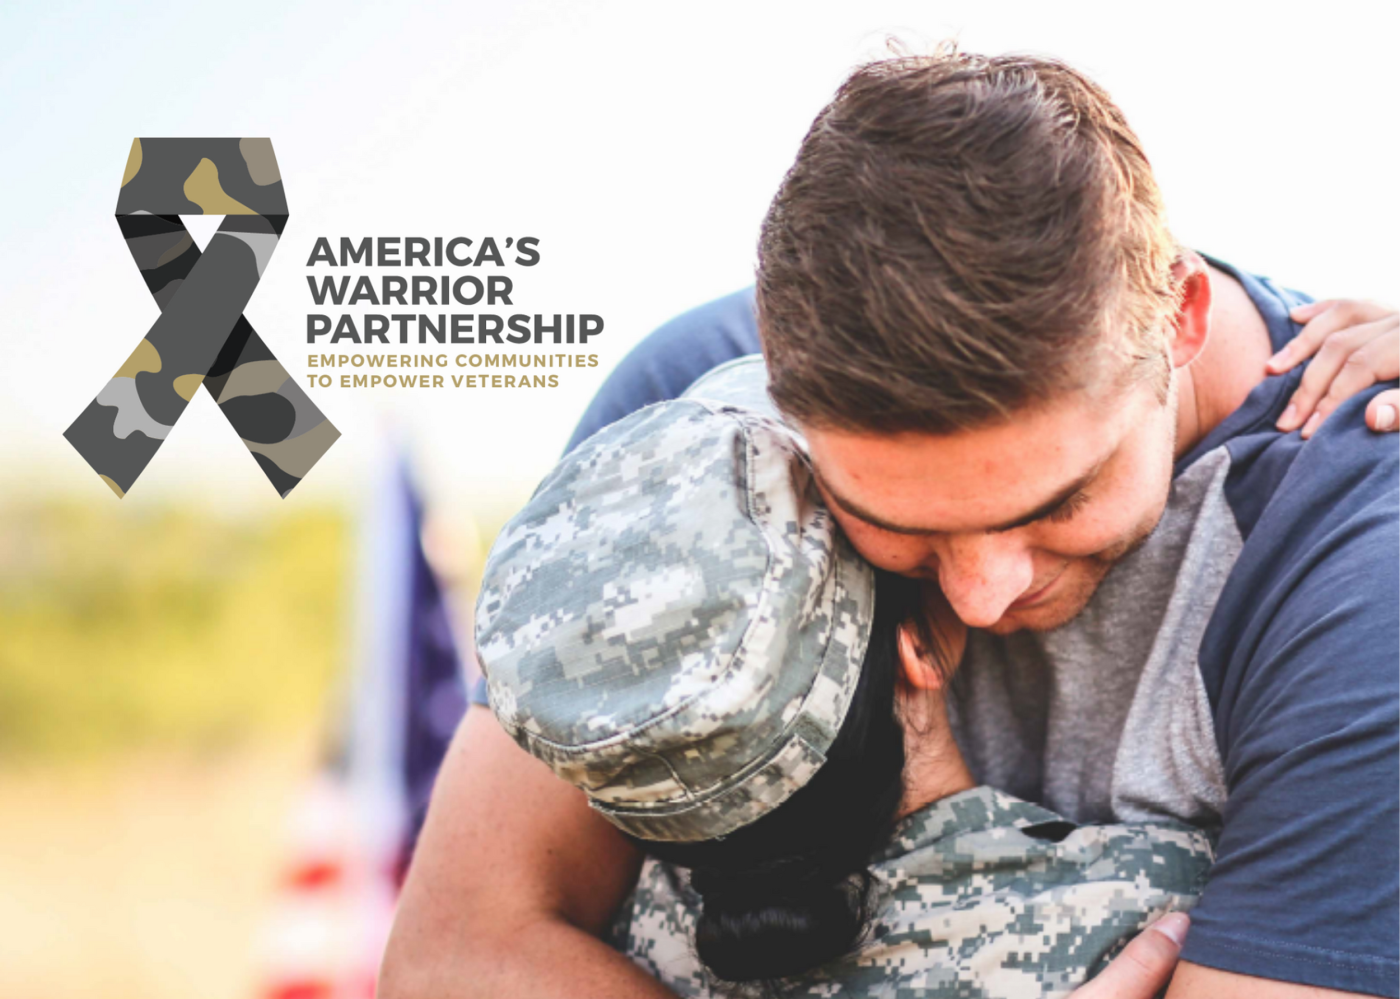 Veterans get resources, support, community through America’s Warrior Partnership